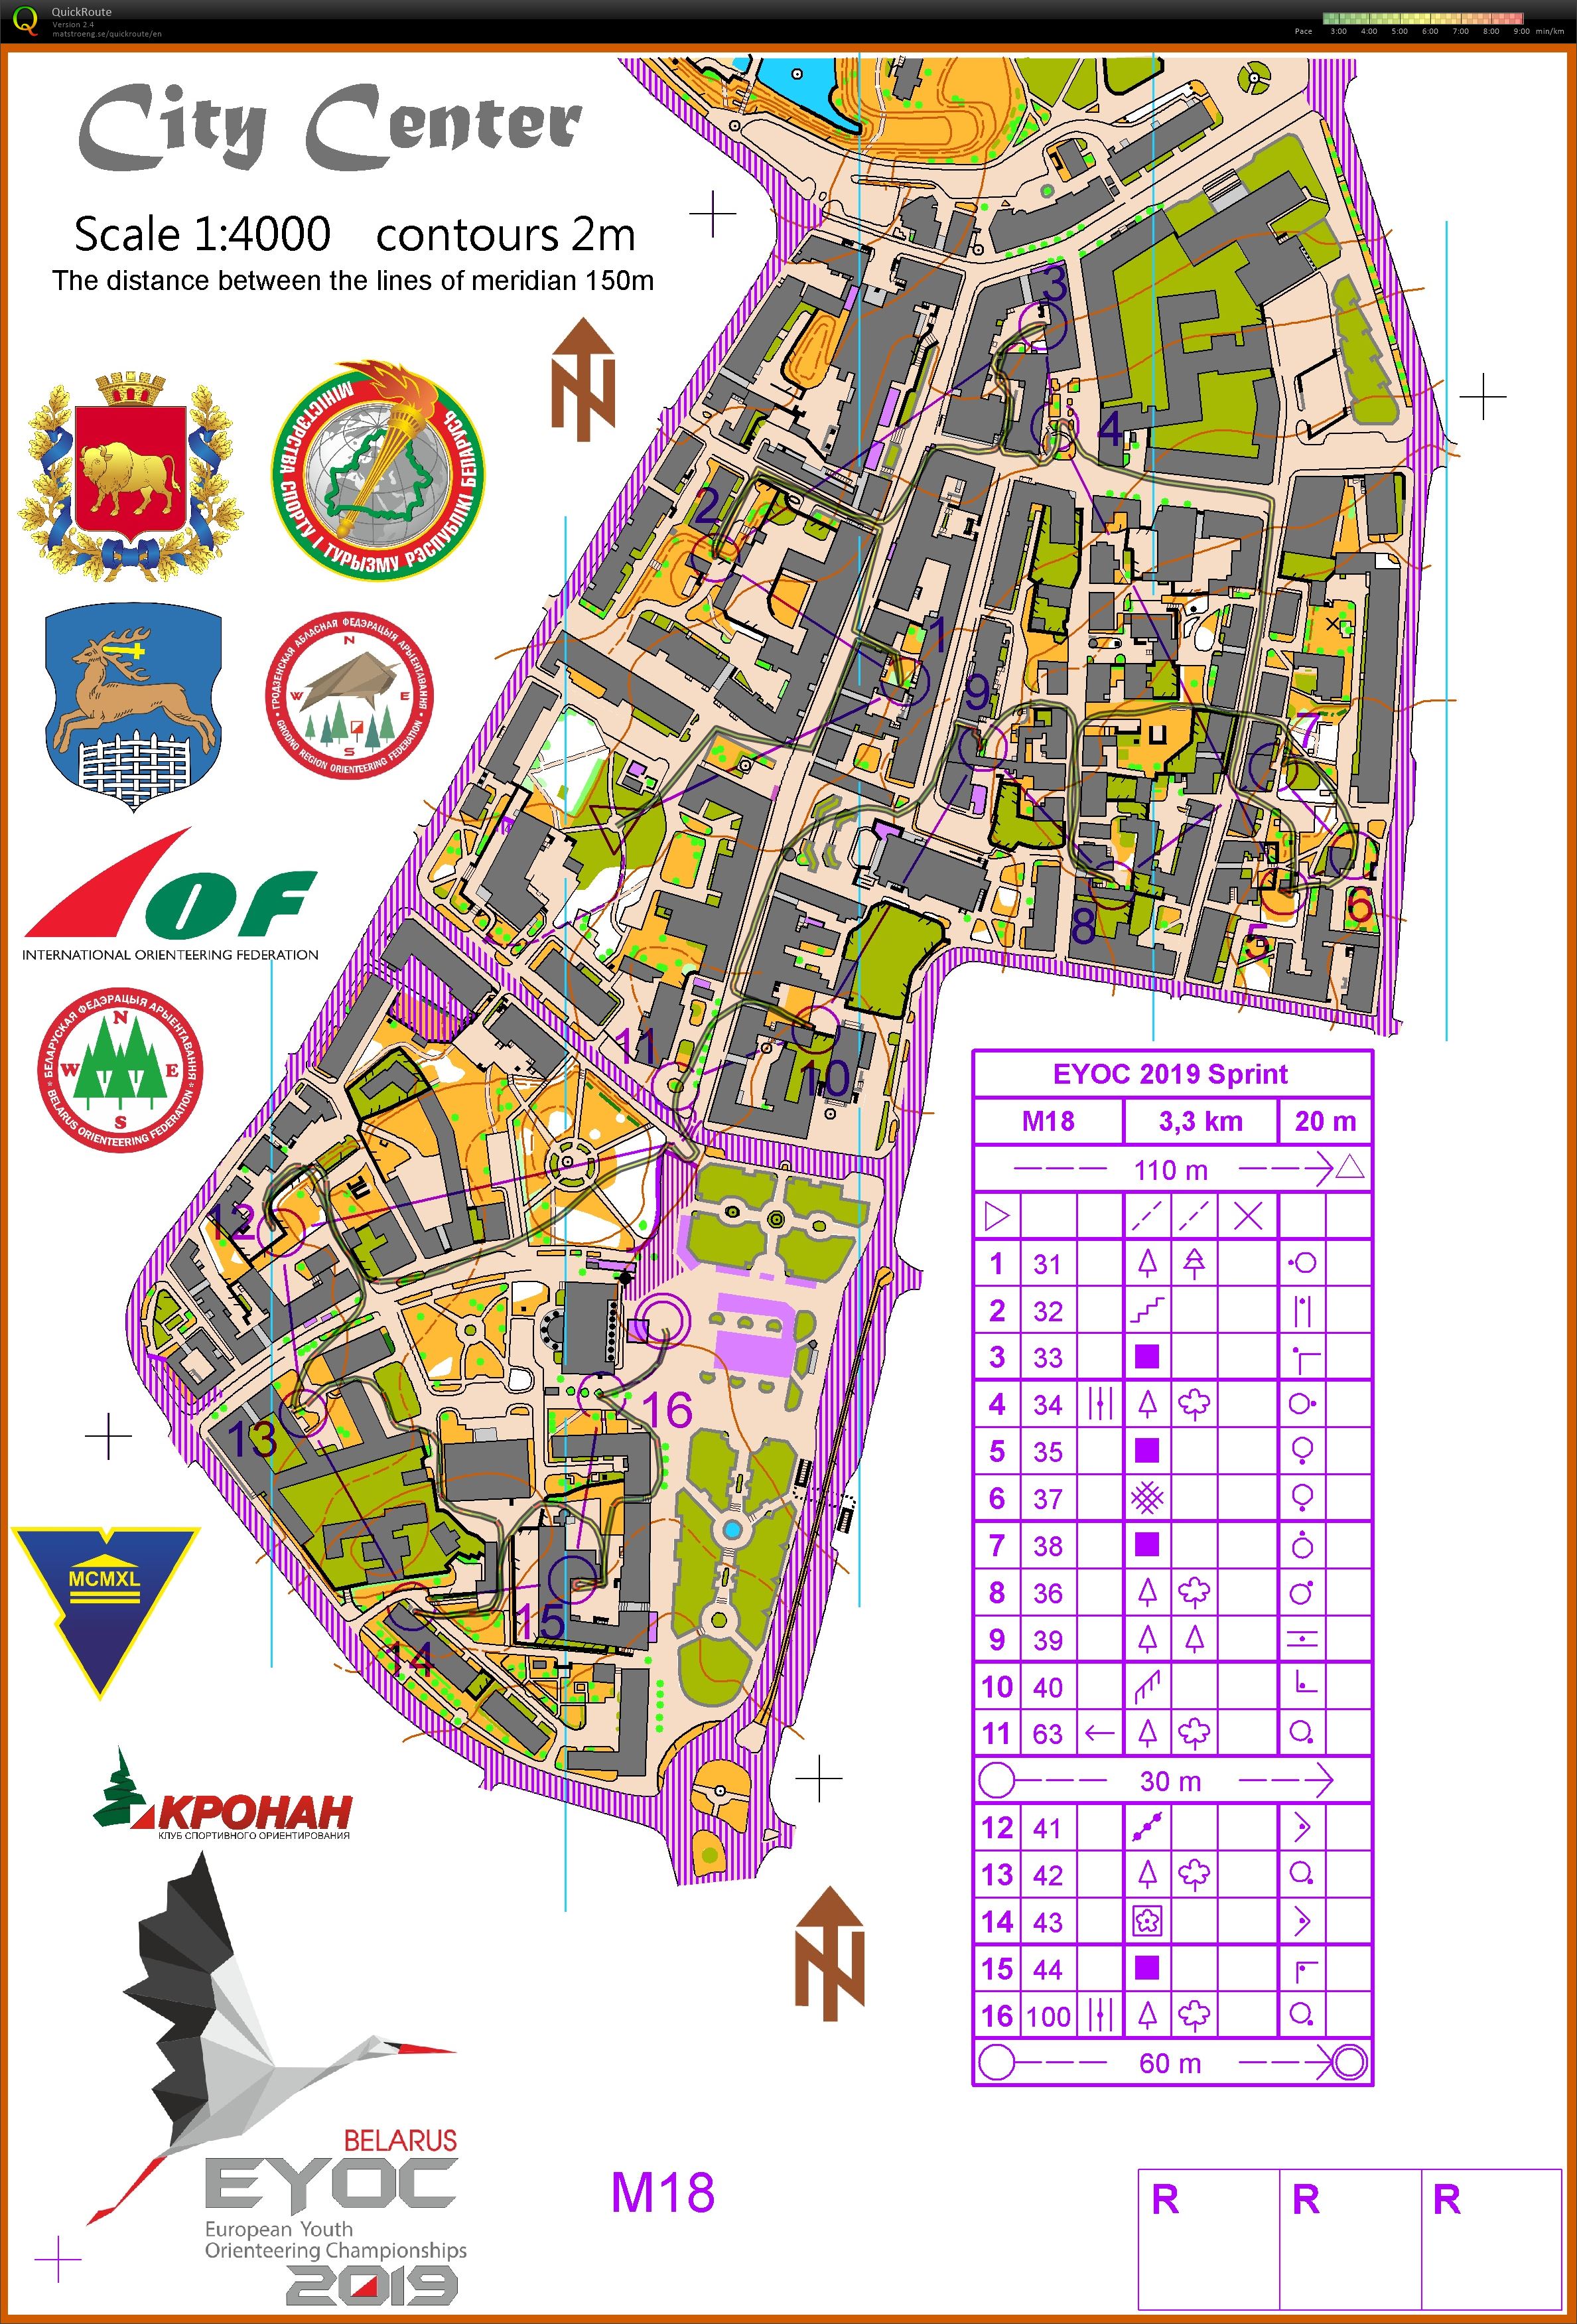 European Youth Orienteering Championships - EYOC - Sprint (30/06/2019)